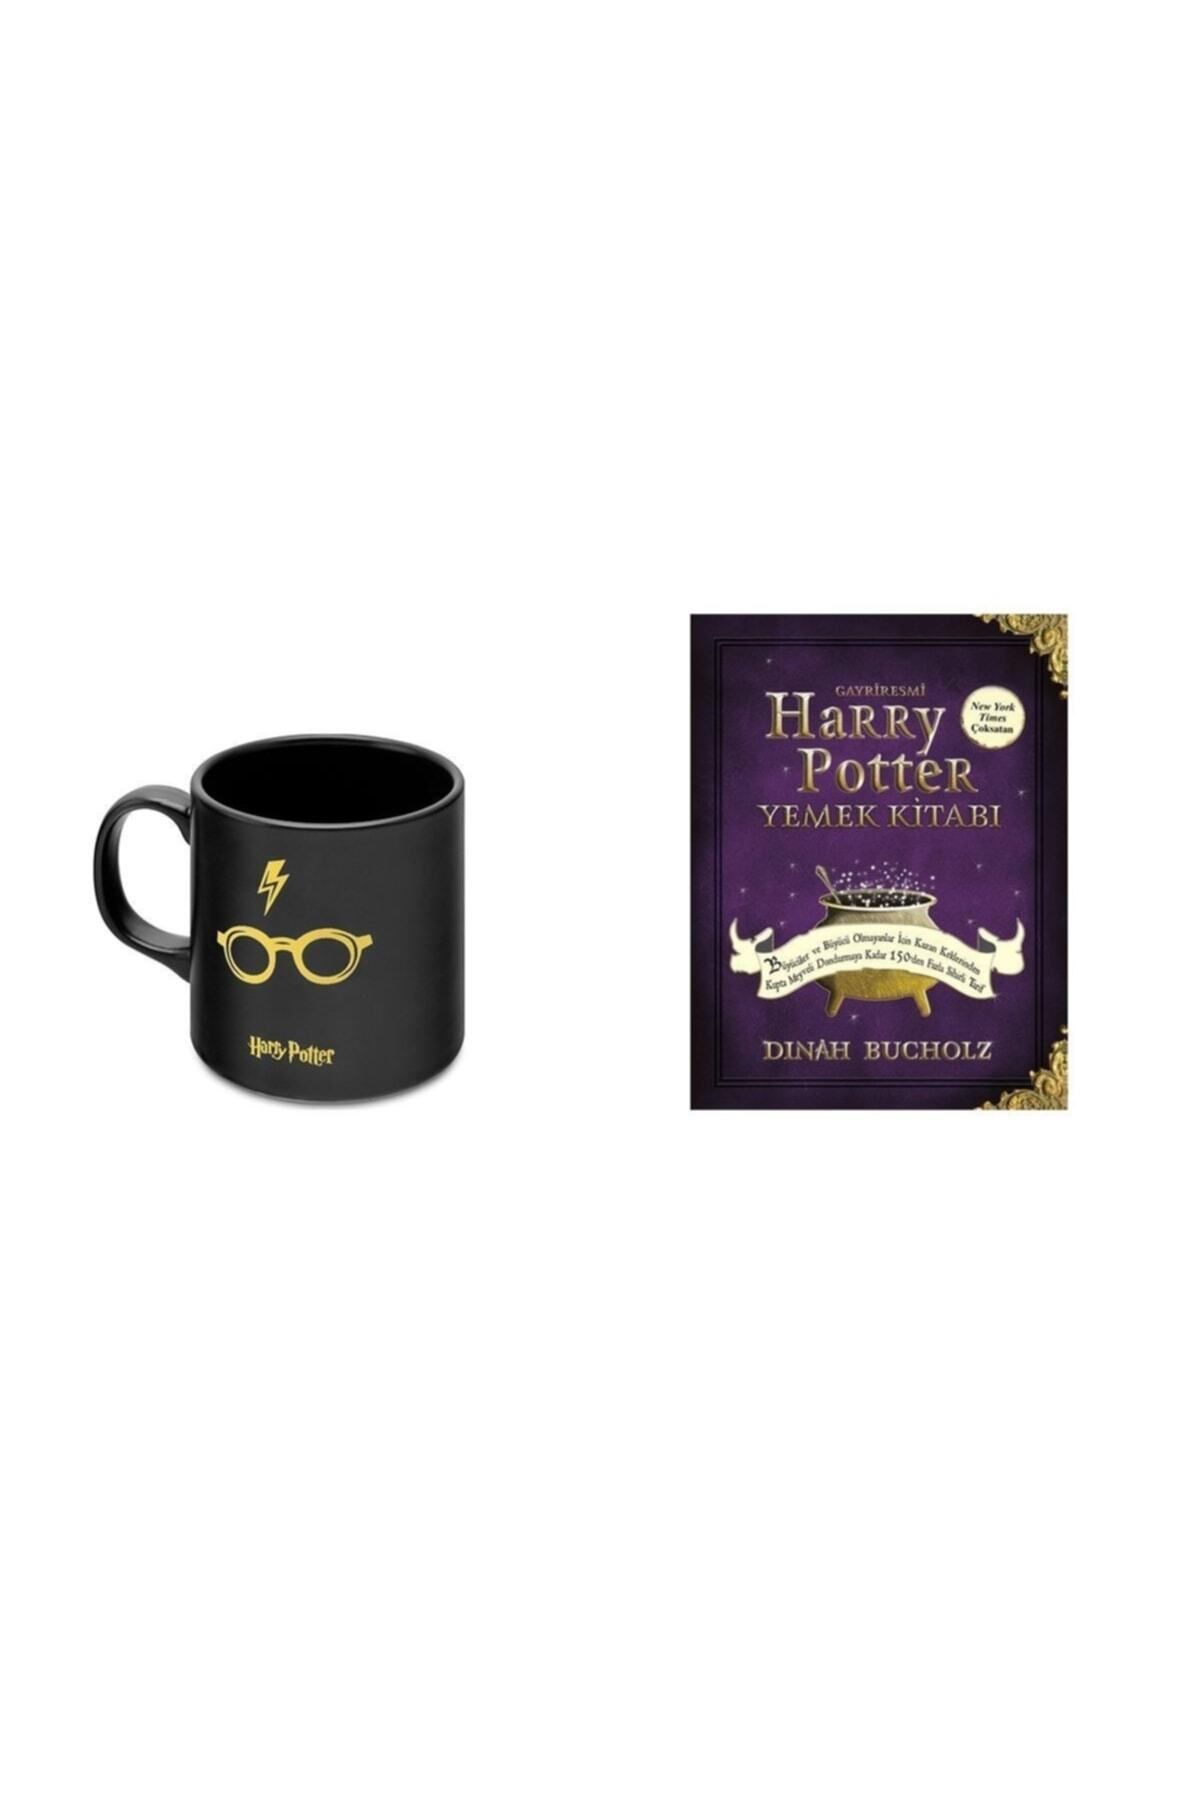 Mabbels Gayriresmi Harry Potter Yemek Kitabı (CİLTLİ) - Dinah Bucholz Ve Harry Potter Mug